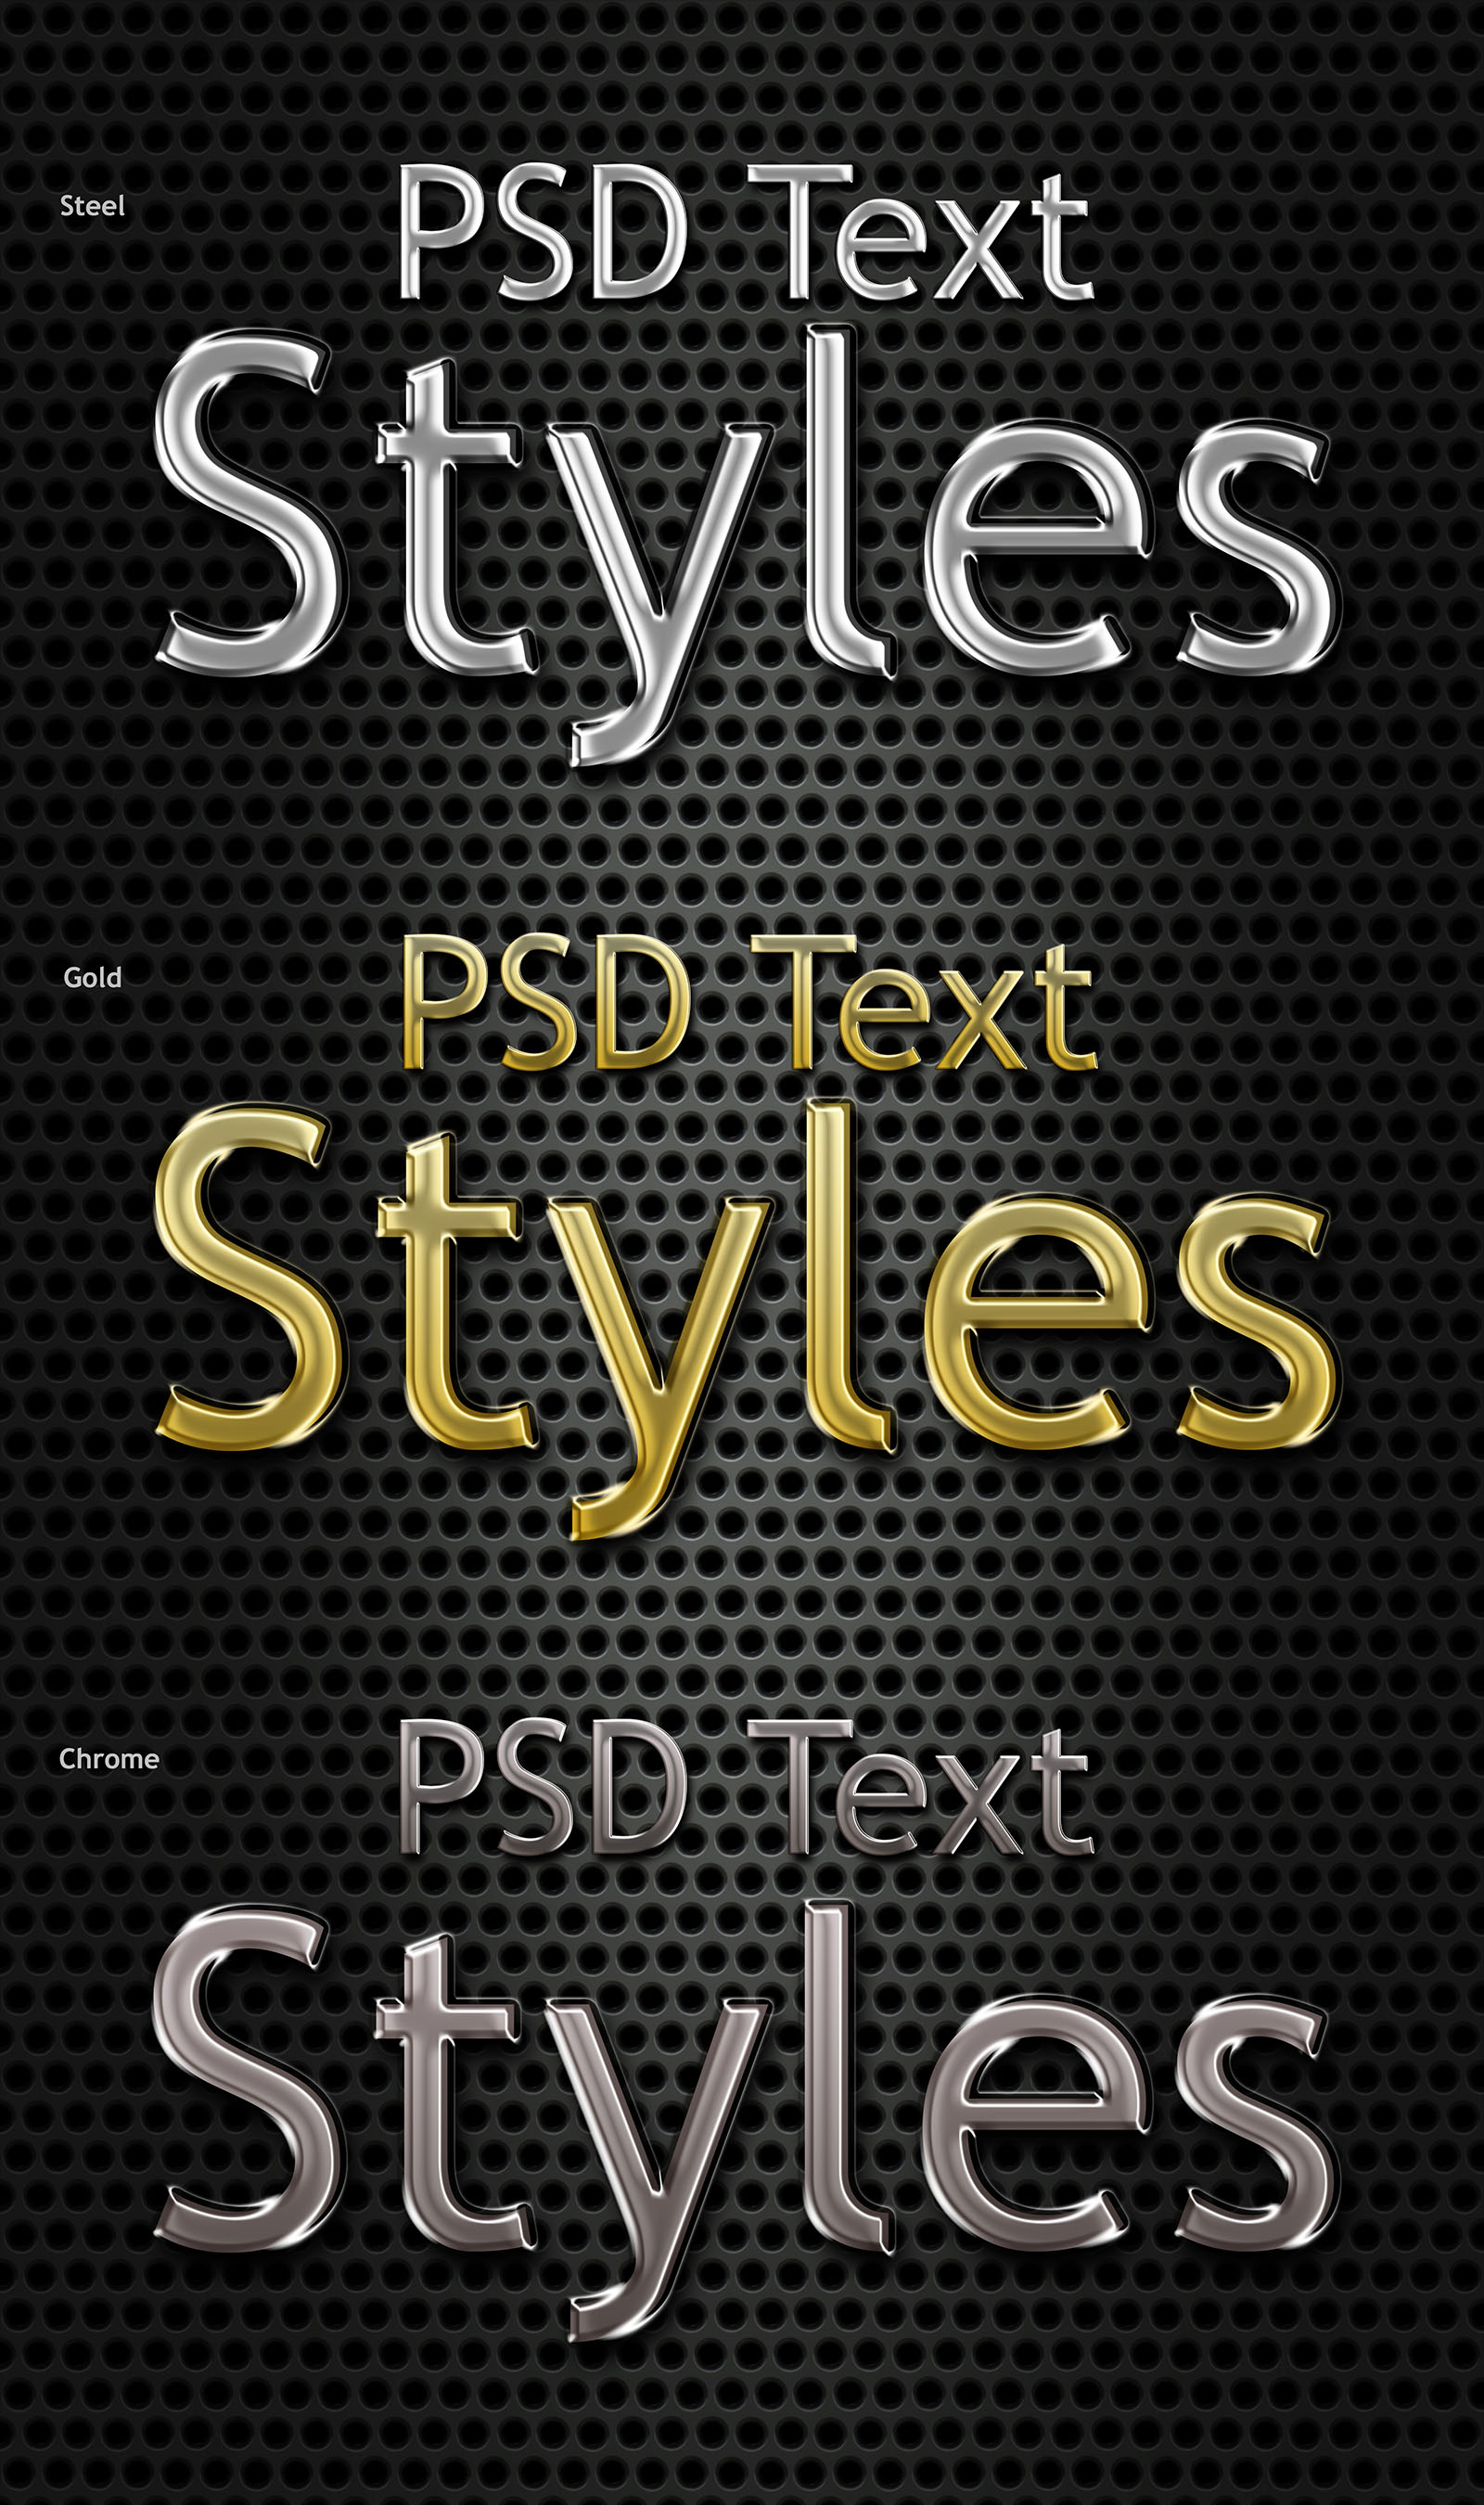 Photoshop PSD metal text styles